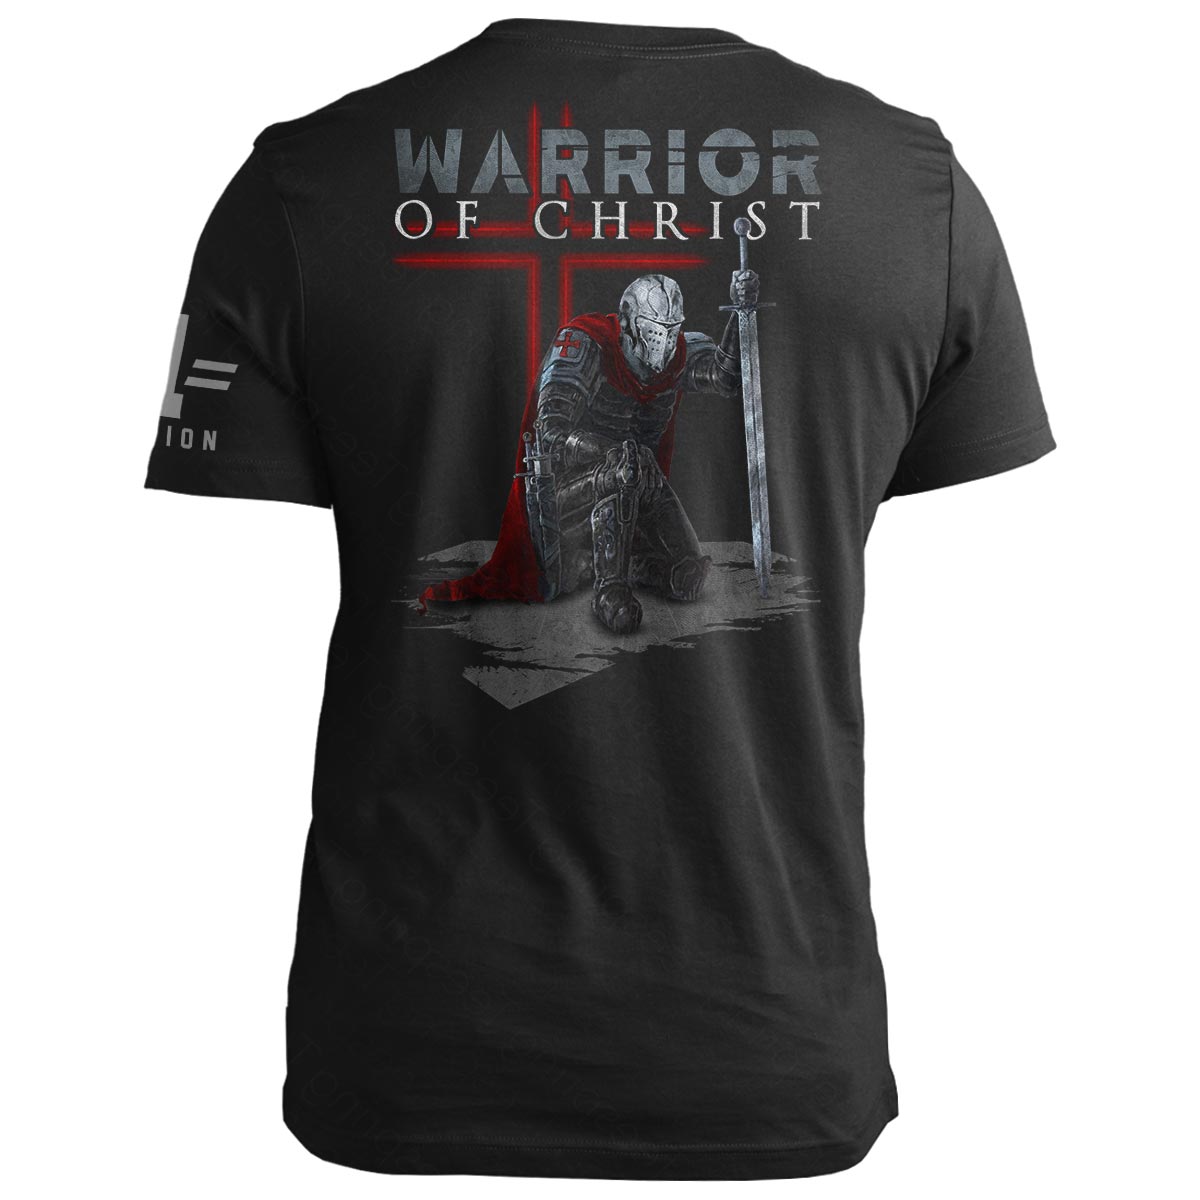 Warrior of Christ